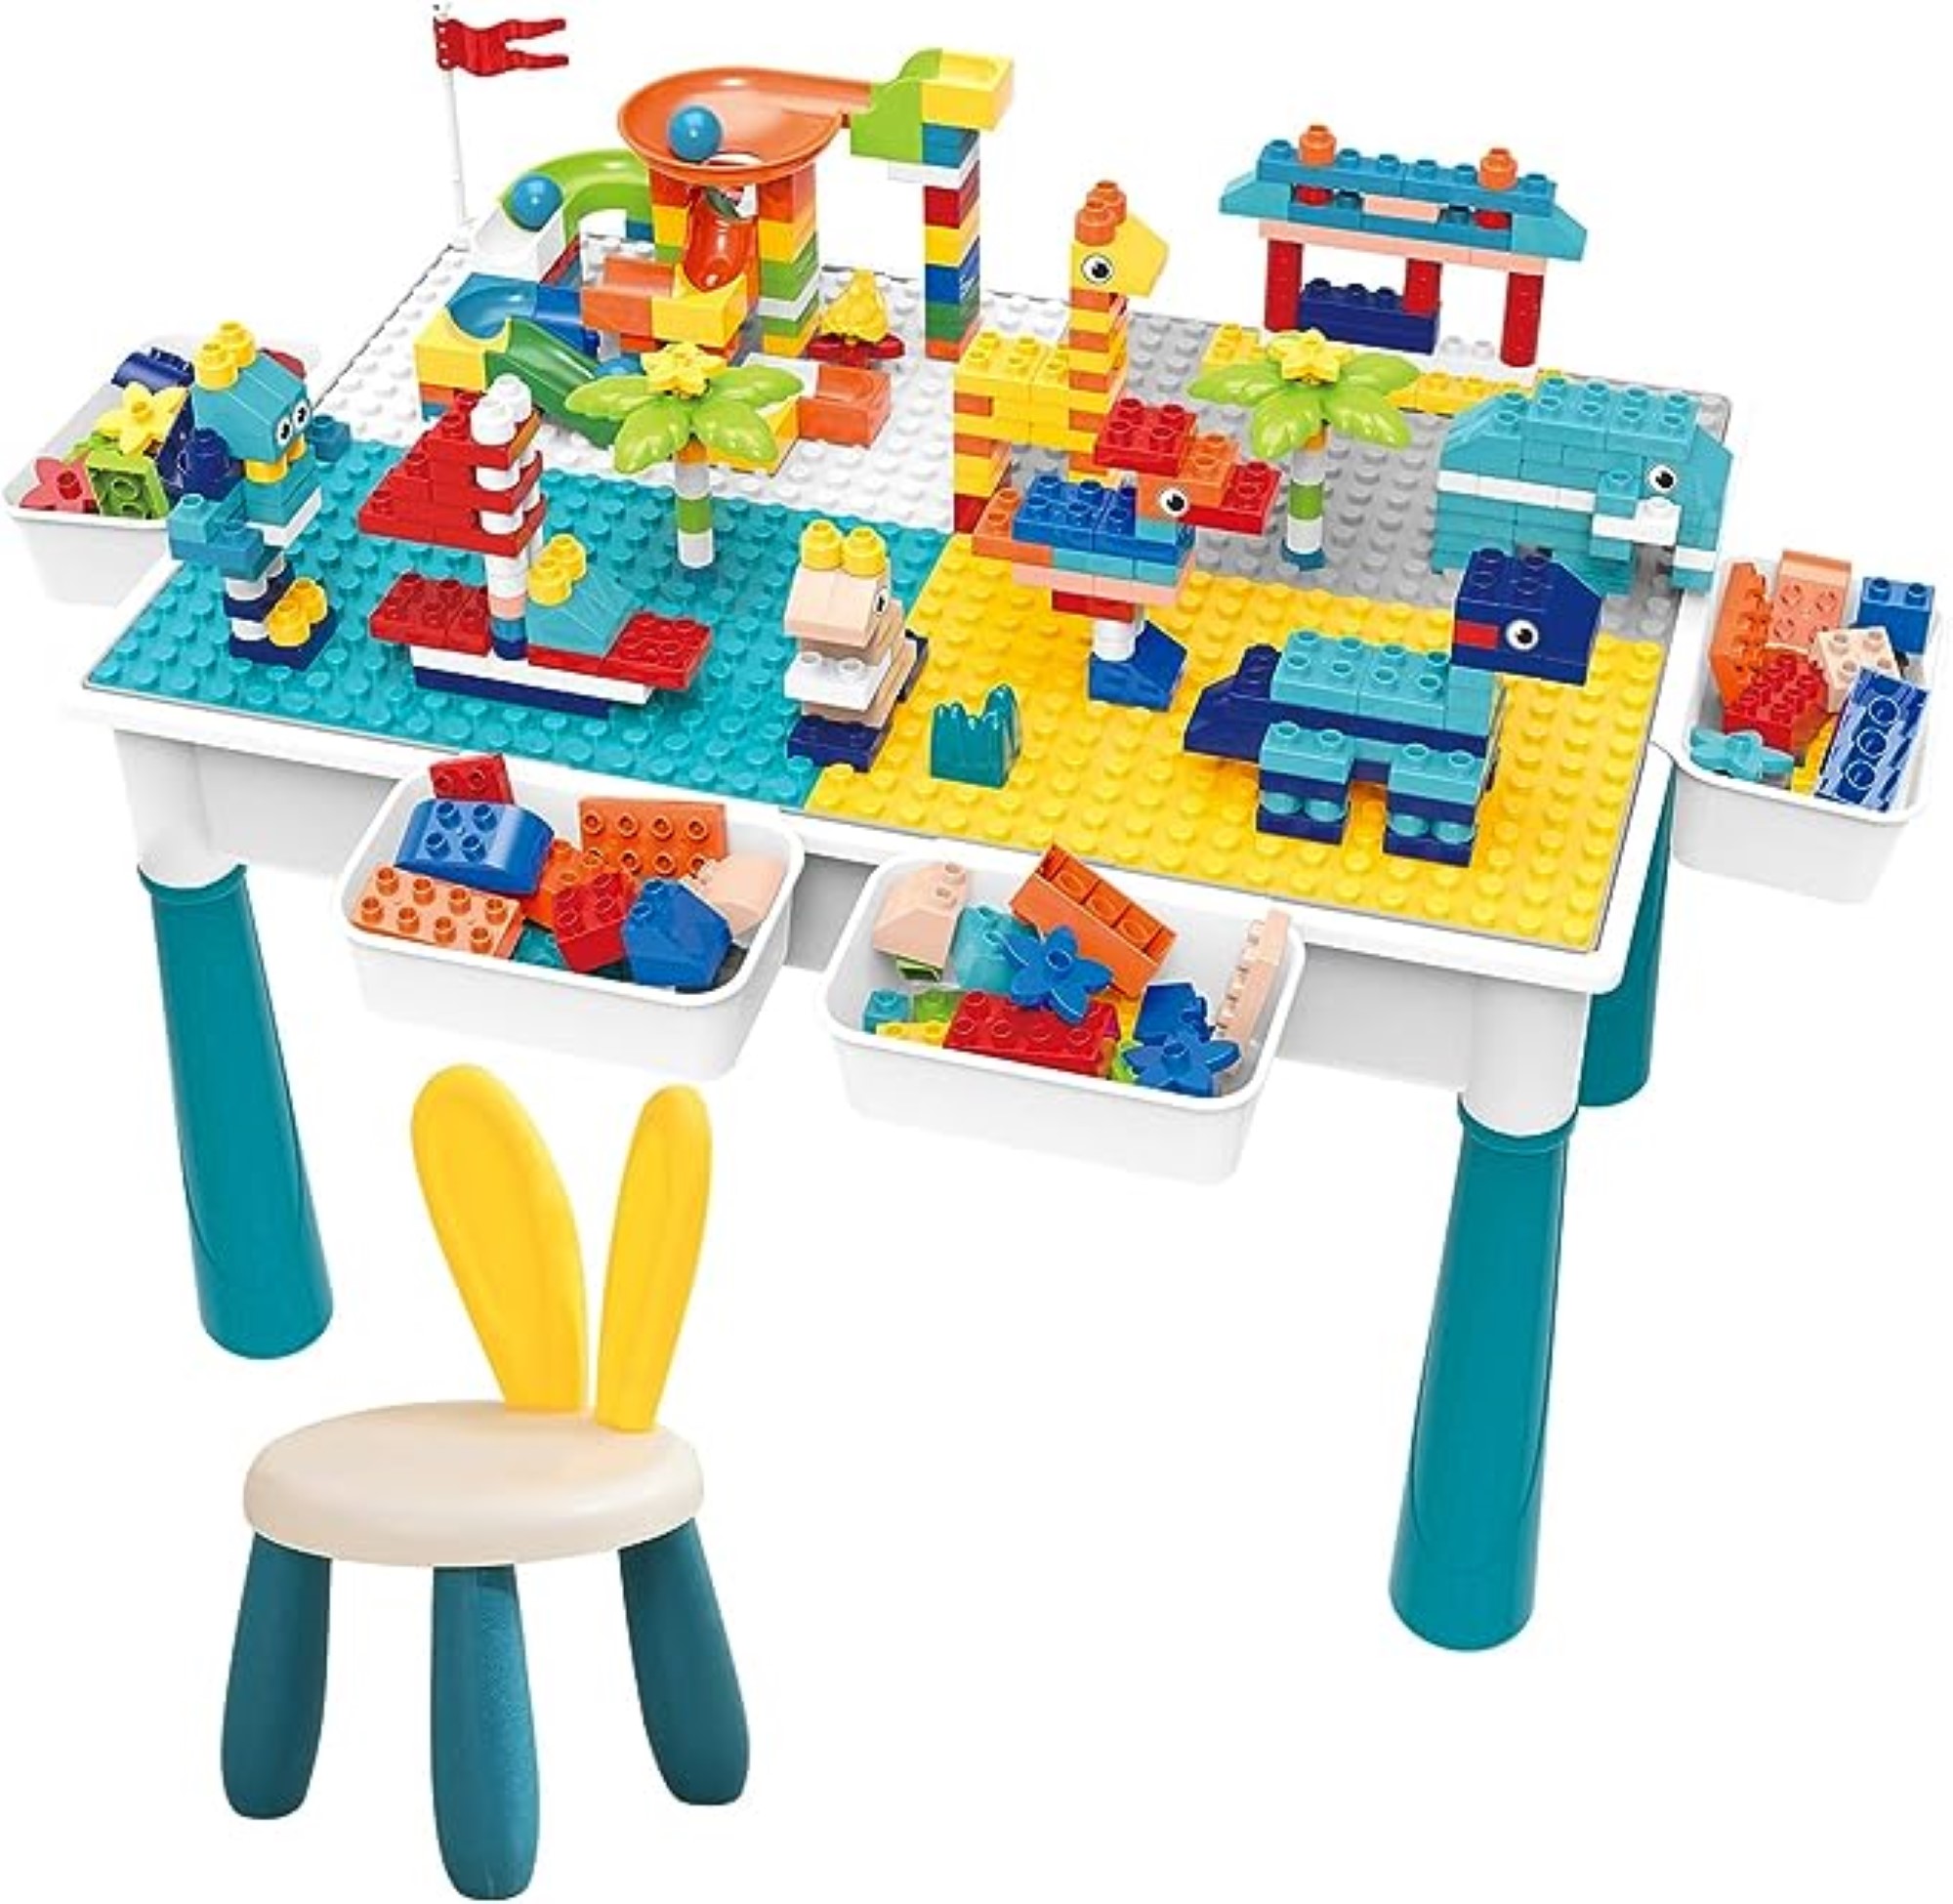 Pikkaboo Build & Play LEGO Table